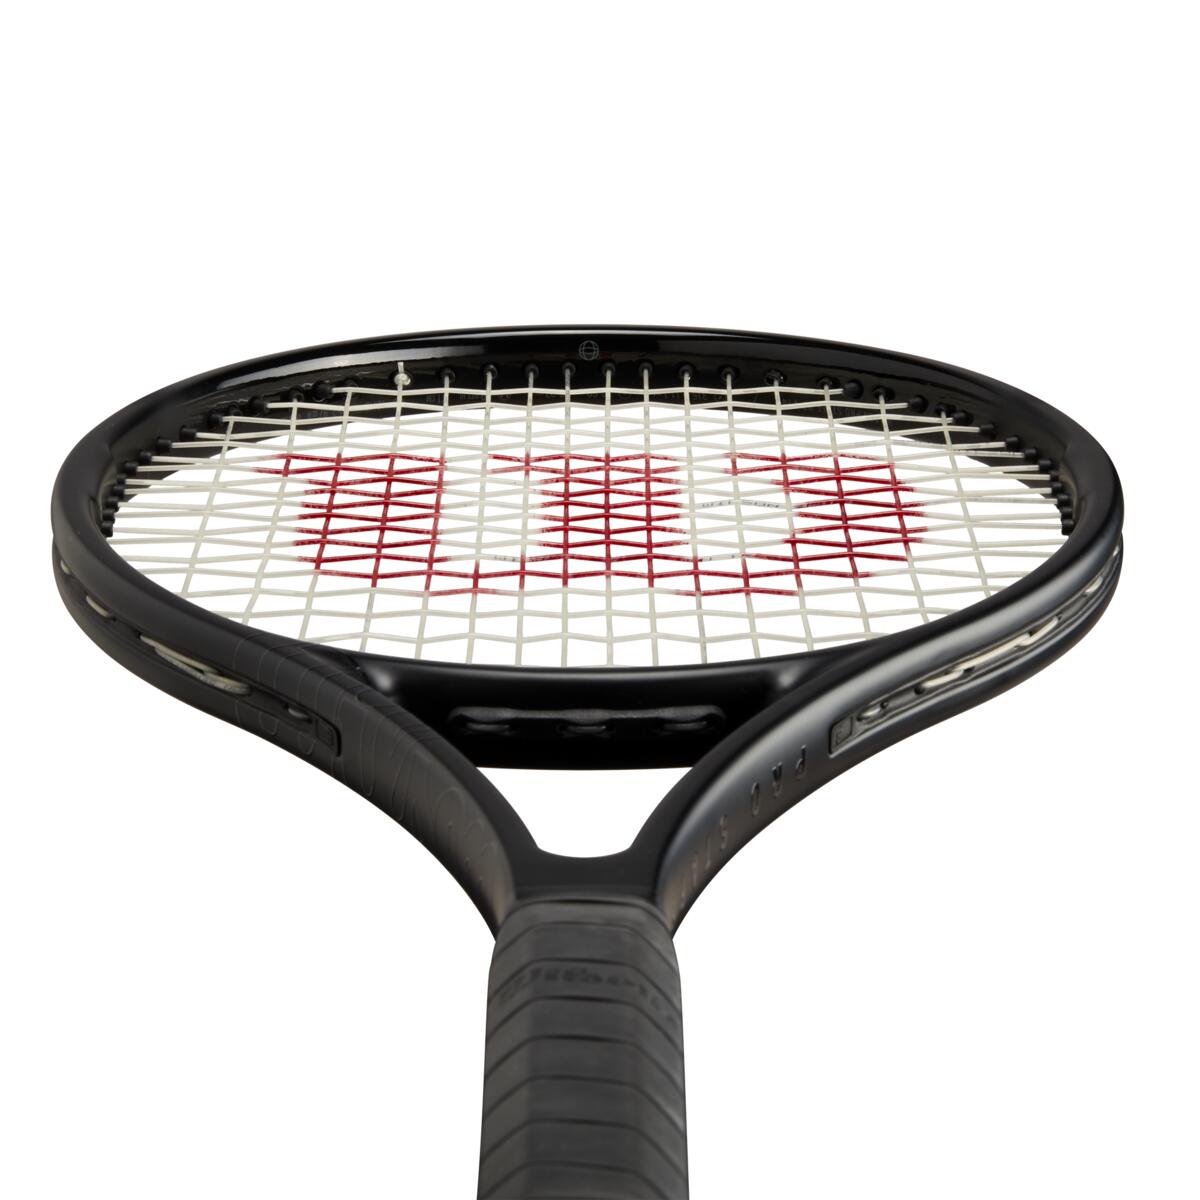 Noir Pro Staff 97 V14 Tennis Racket